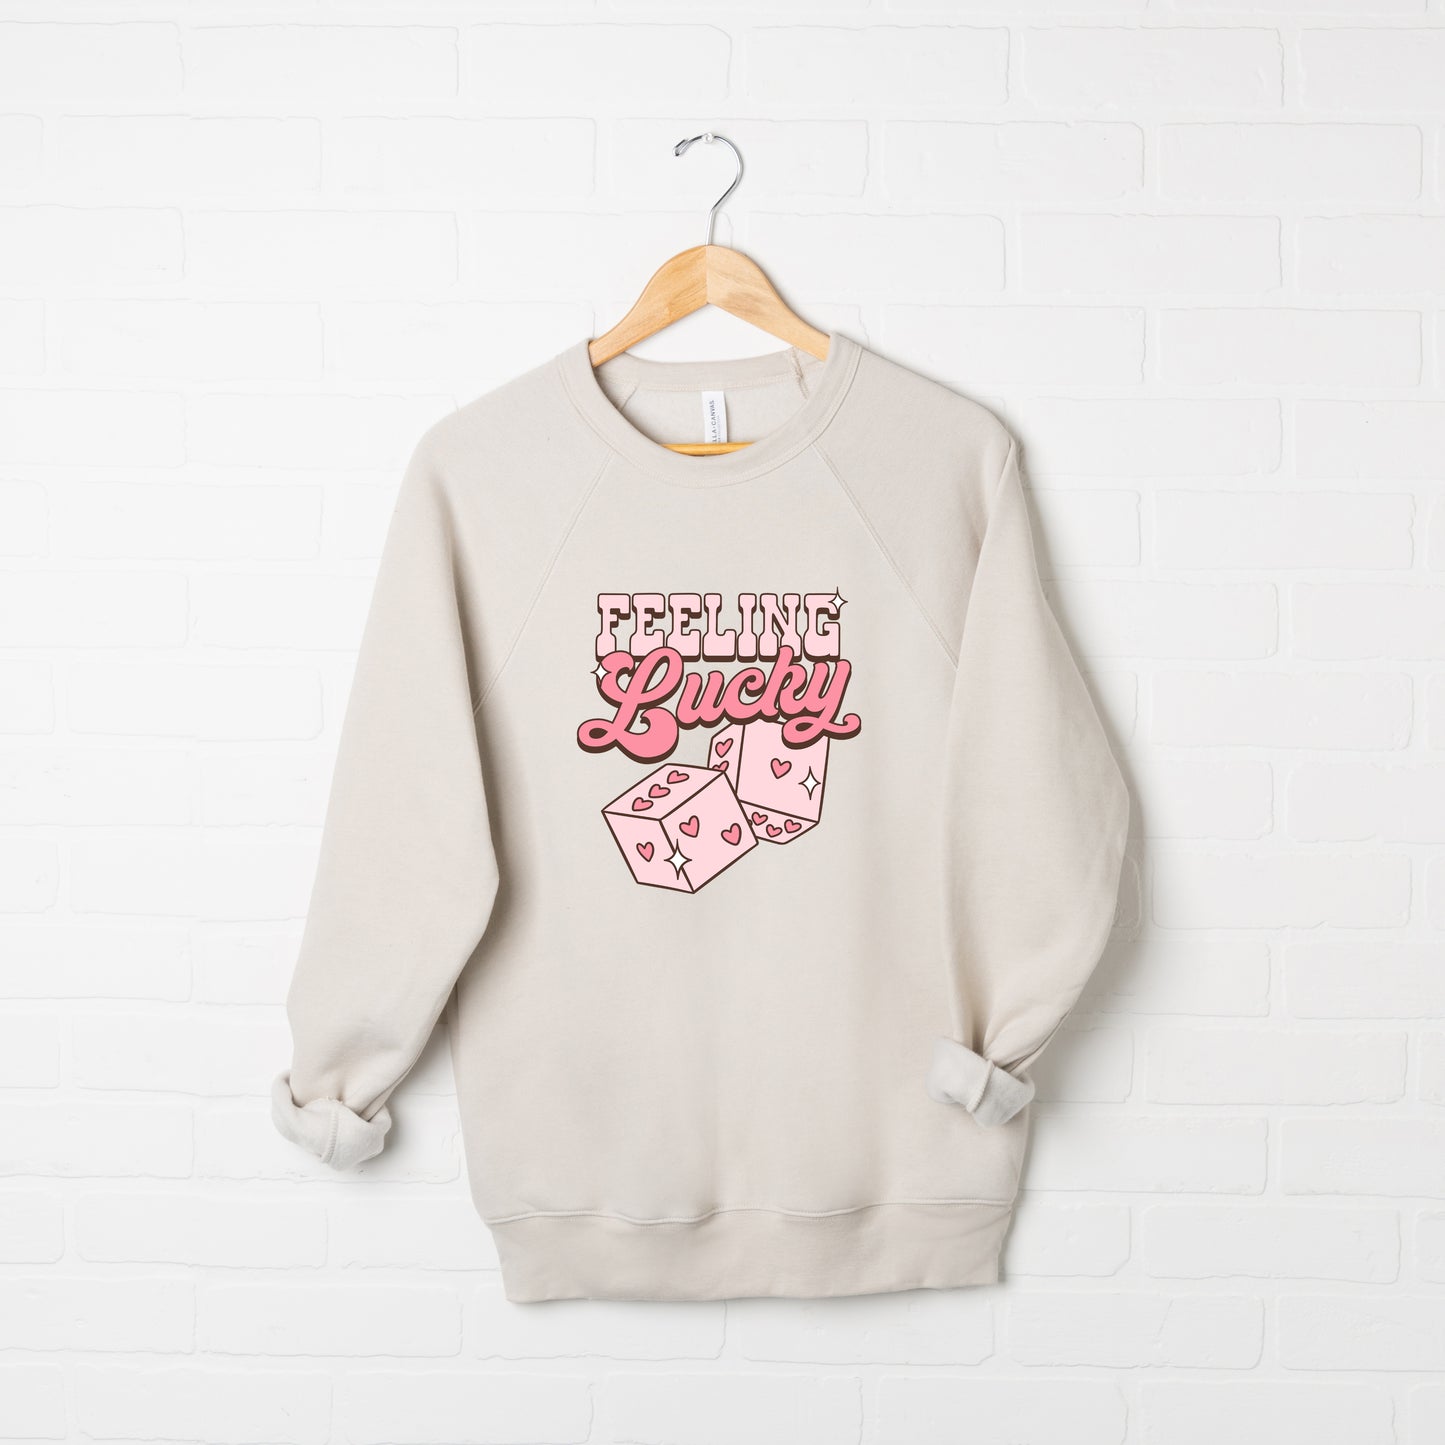 Feeling Lucky Dice | Bella Canvas Sweatshirt